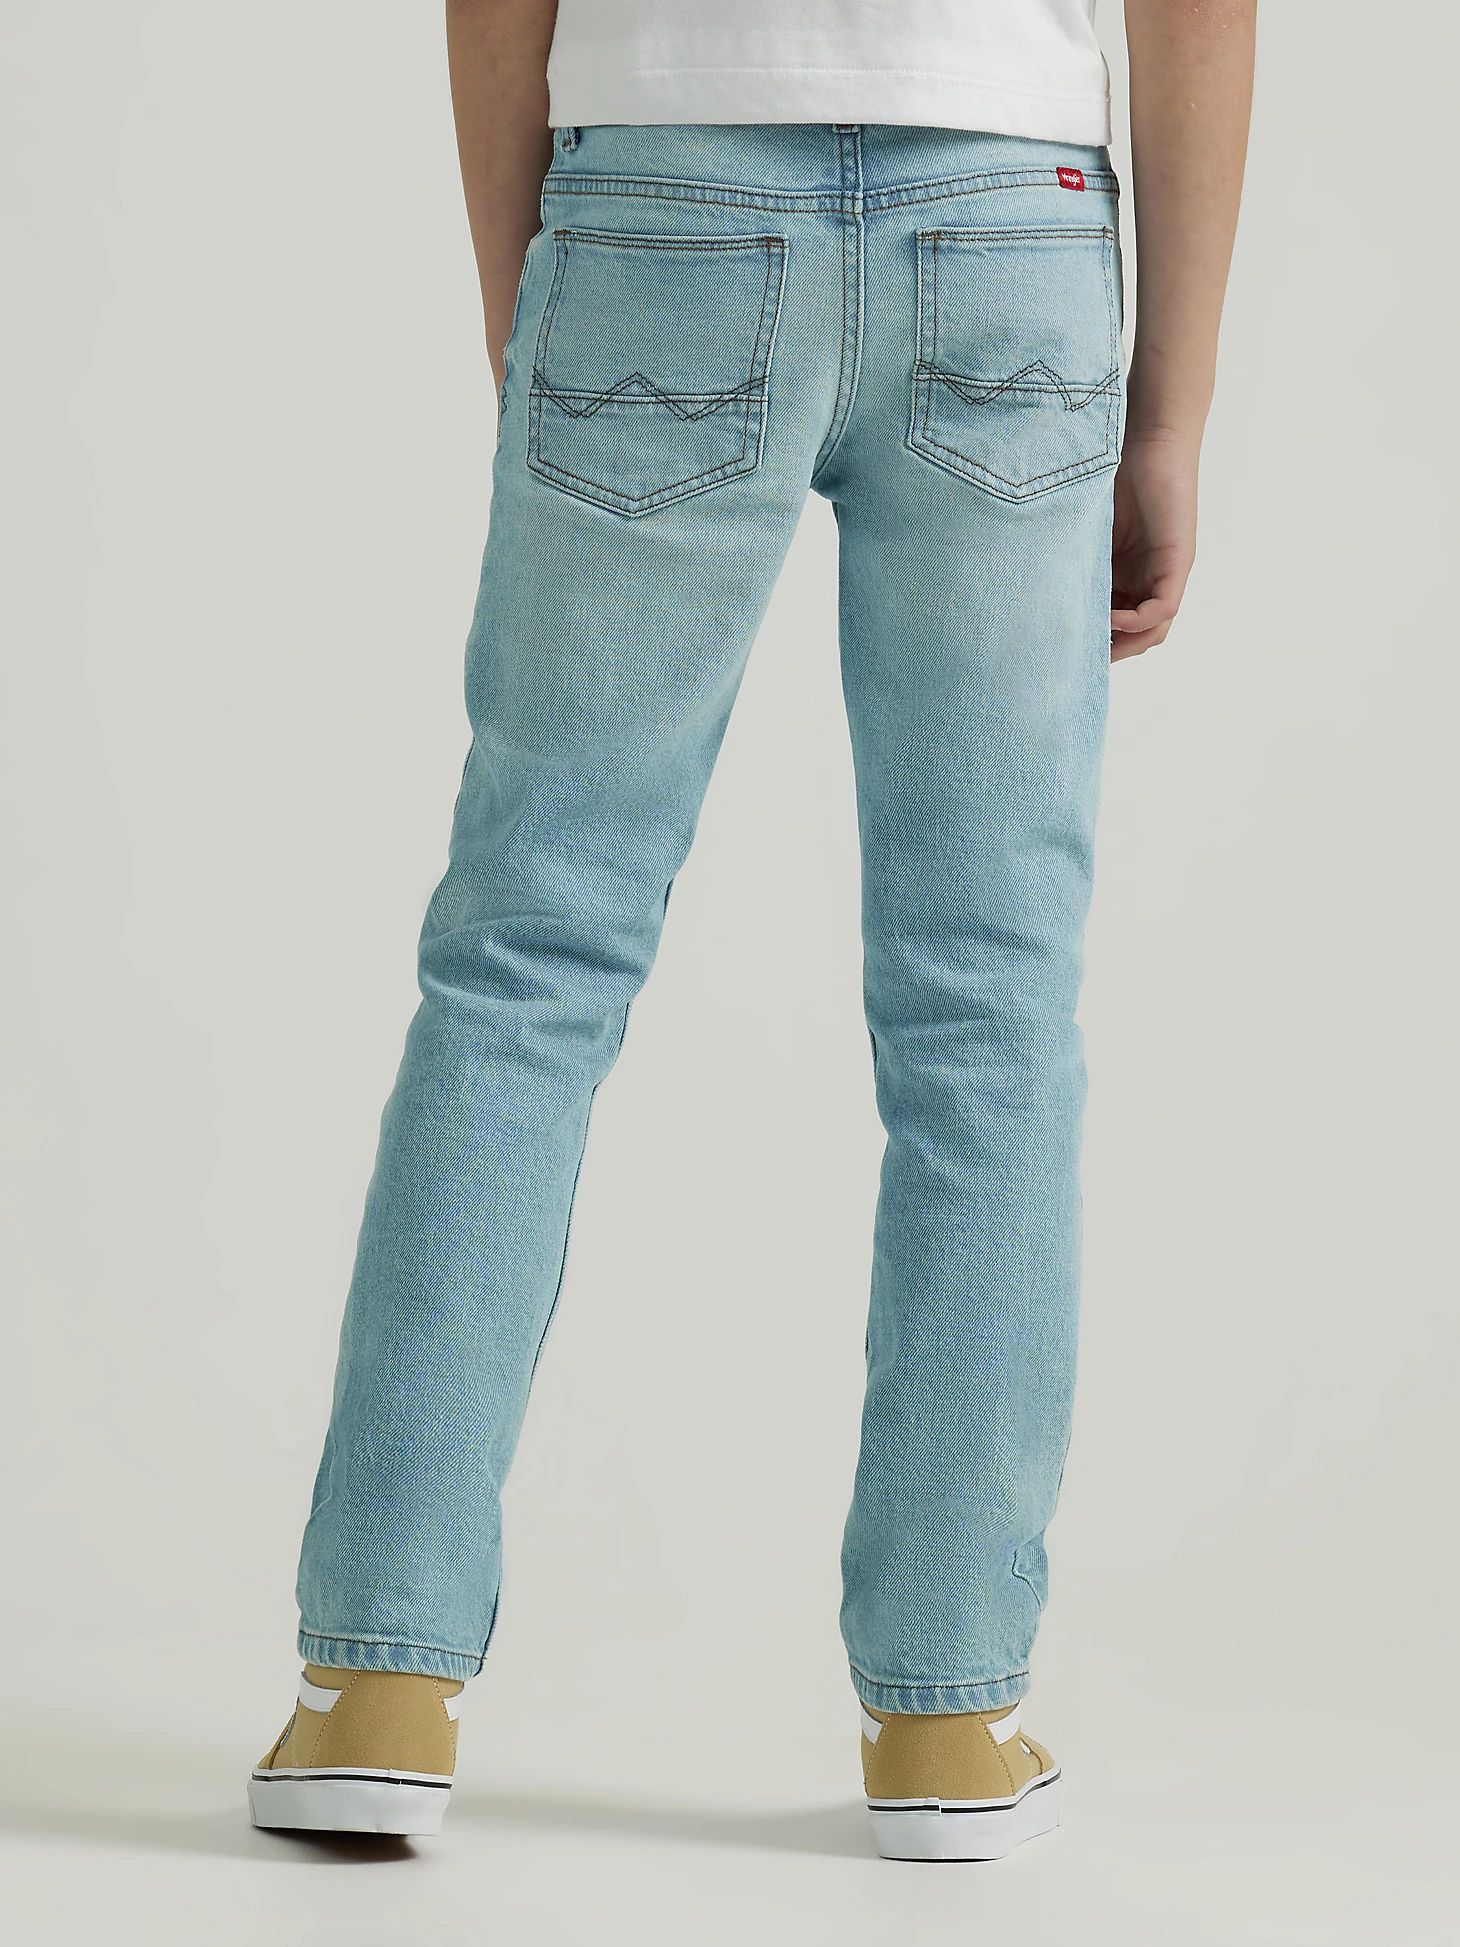 Boy's Indigood Slim Fit Jean (8-16) in Rustic Blue | Wrangler